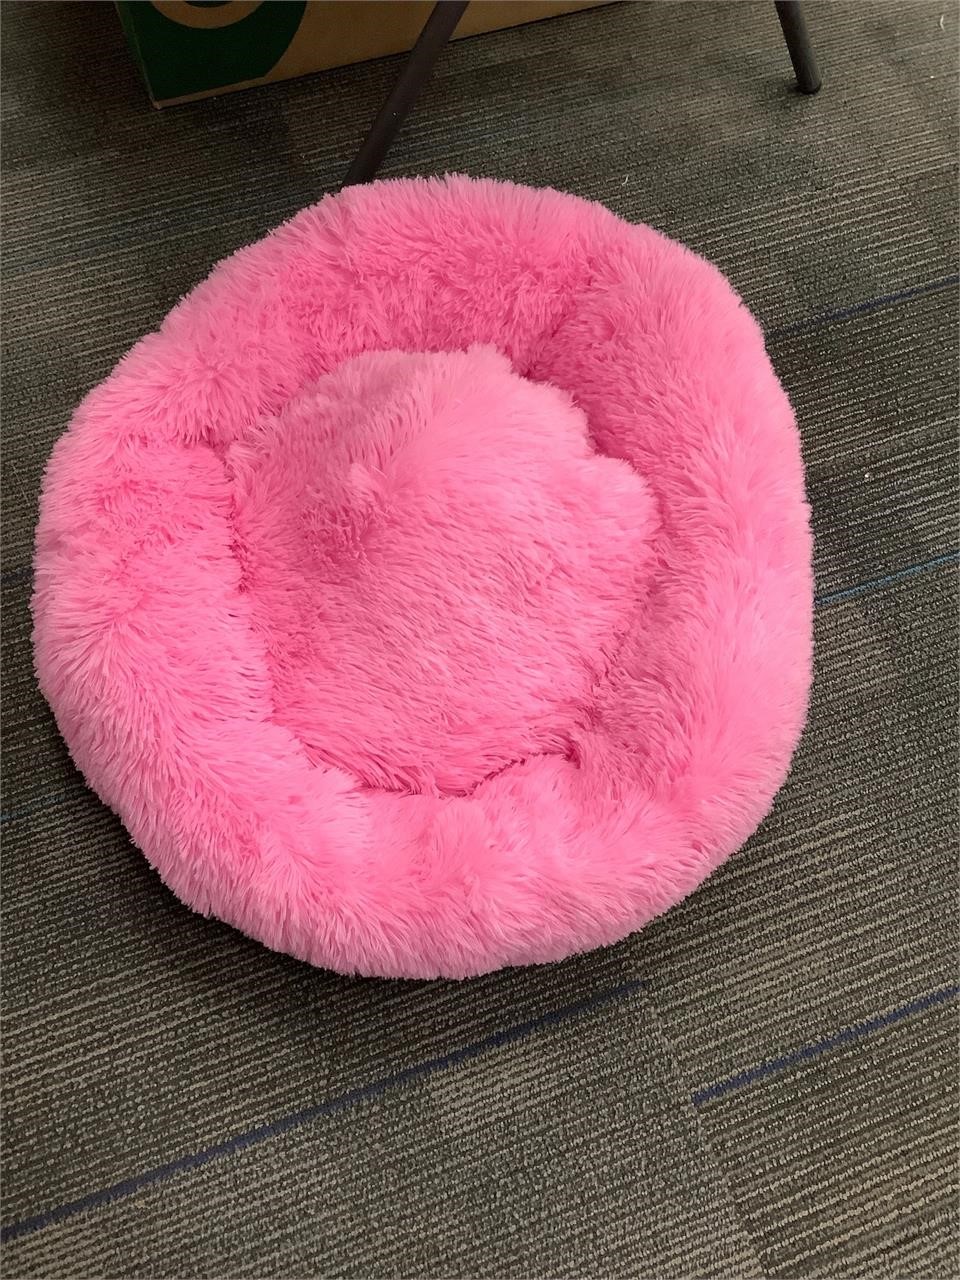 $19  pink shag plush dog bed